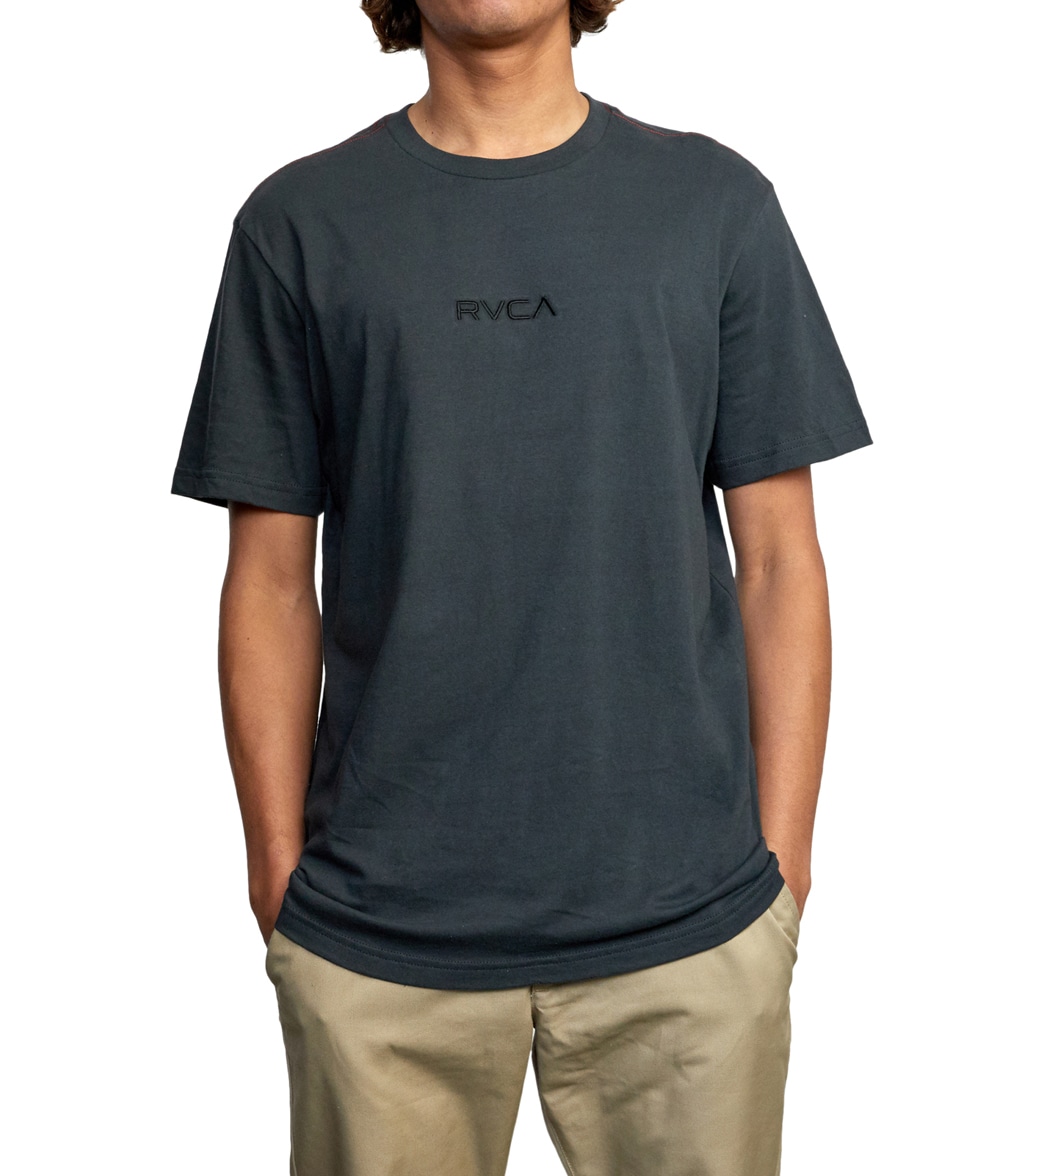 Rvca Men's Short Sleeve Pocket Tee Shirt - Pirate Black Xl - Swimoutlet.com